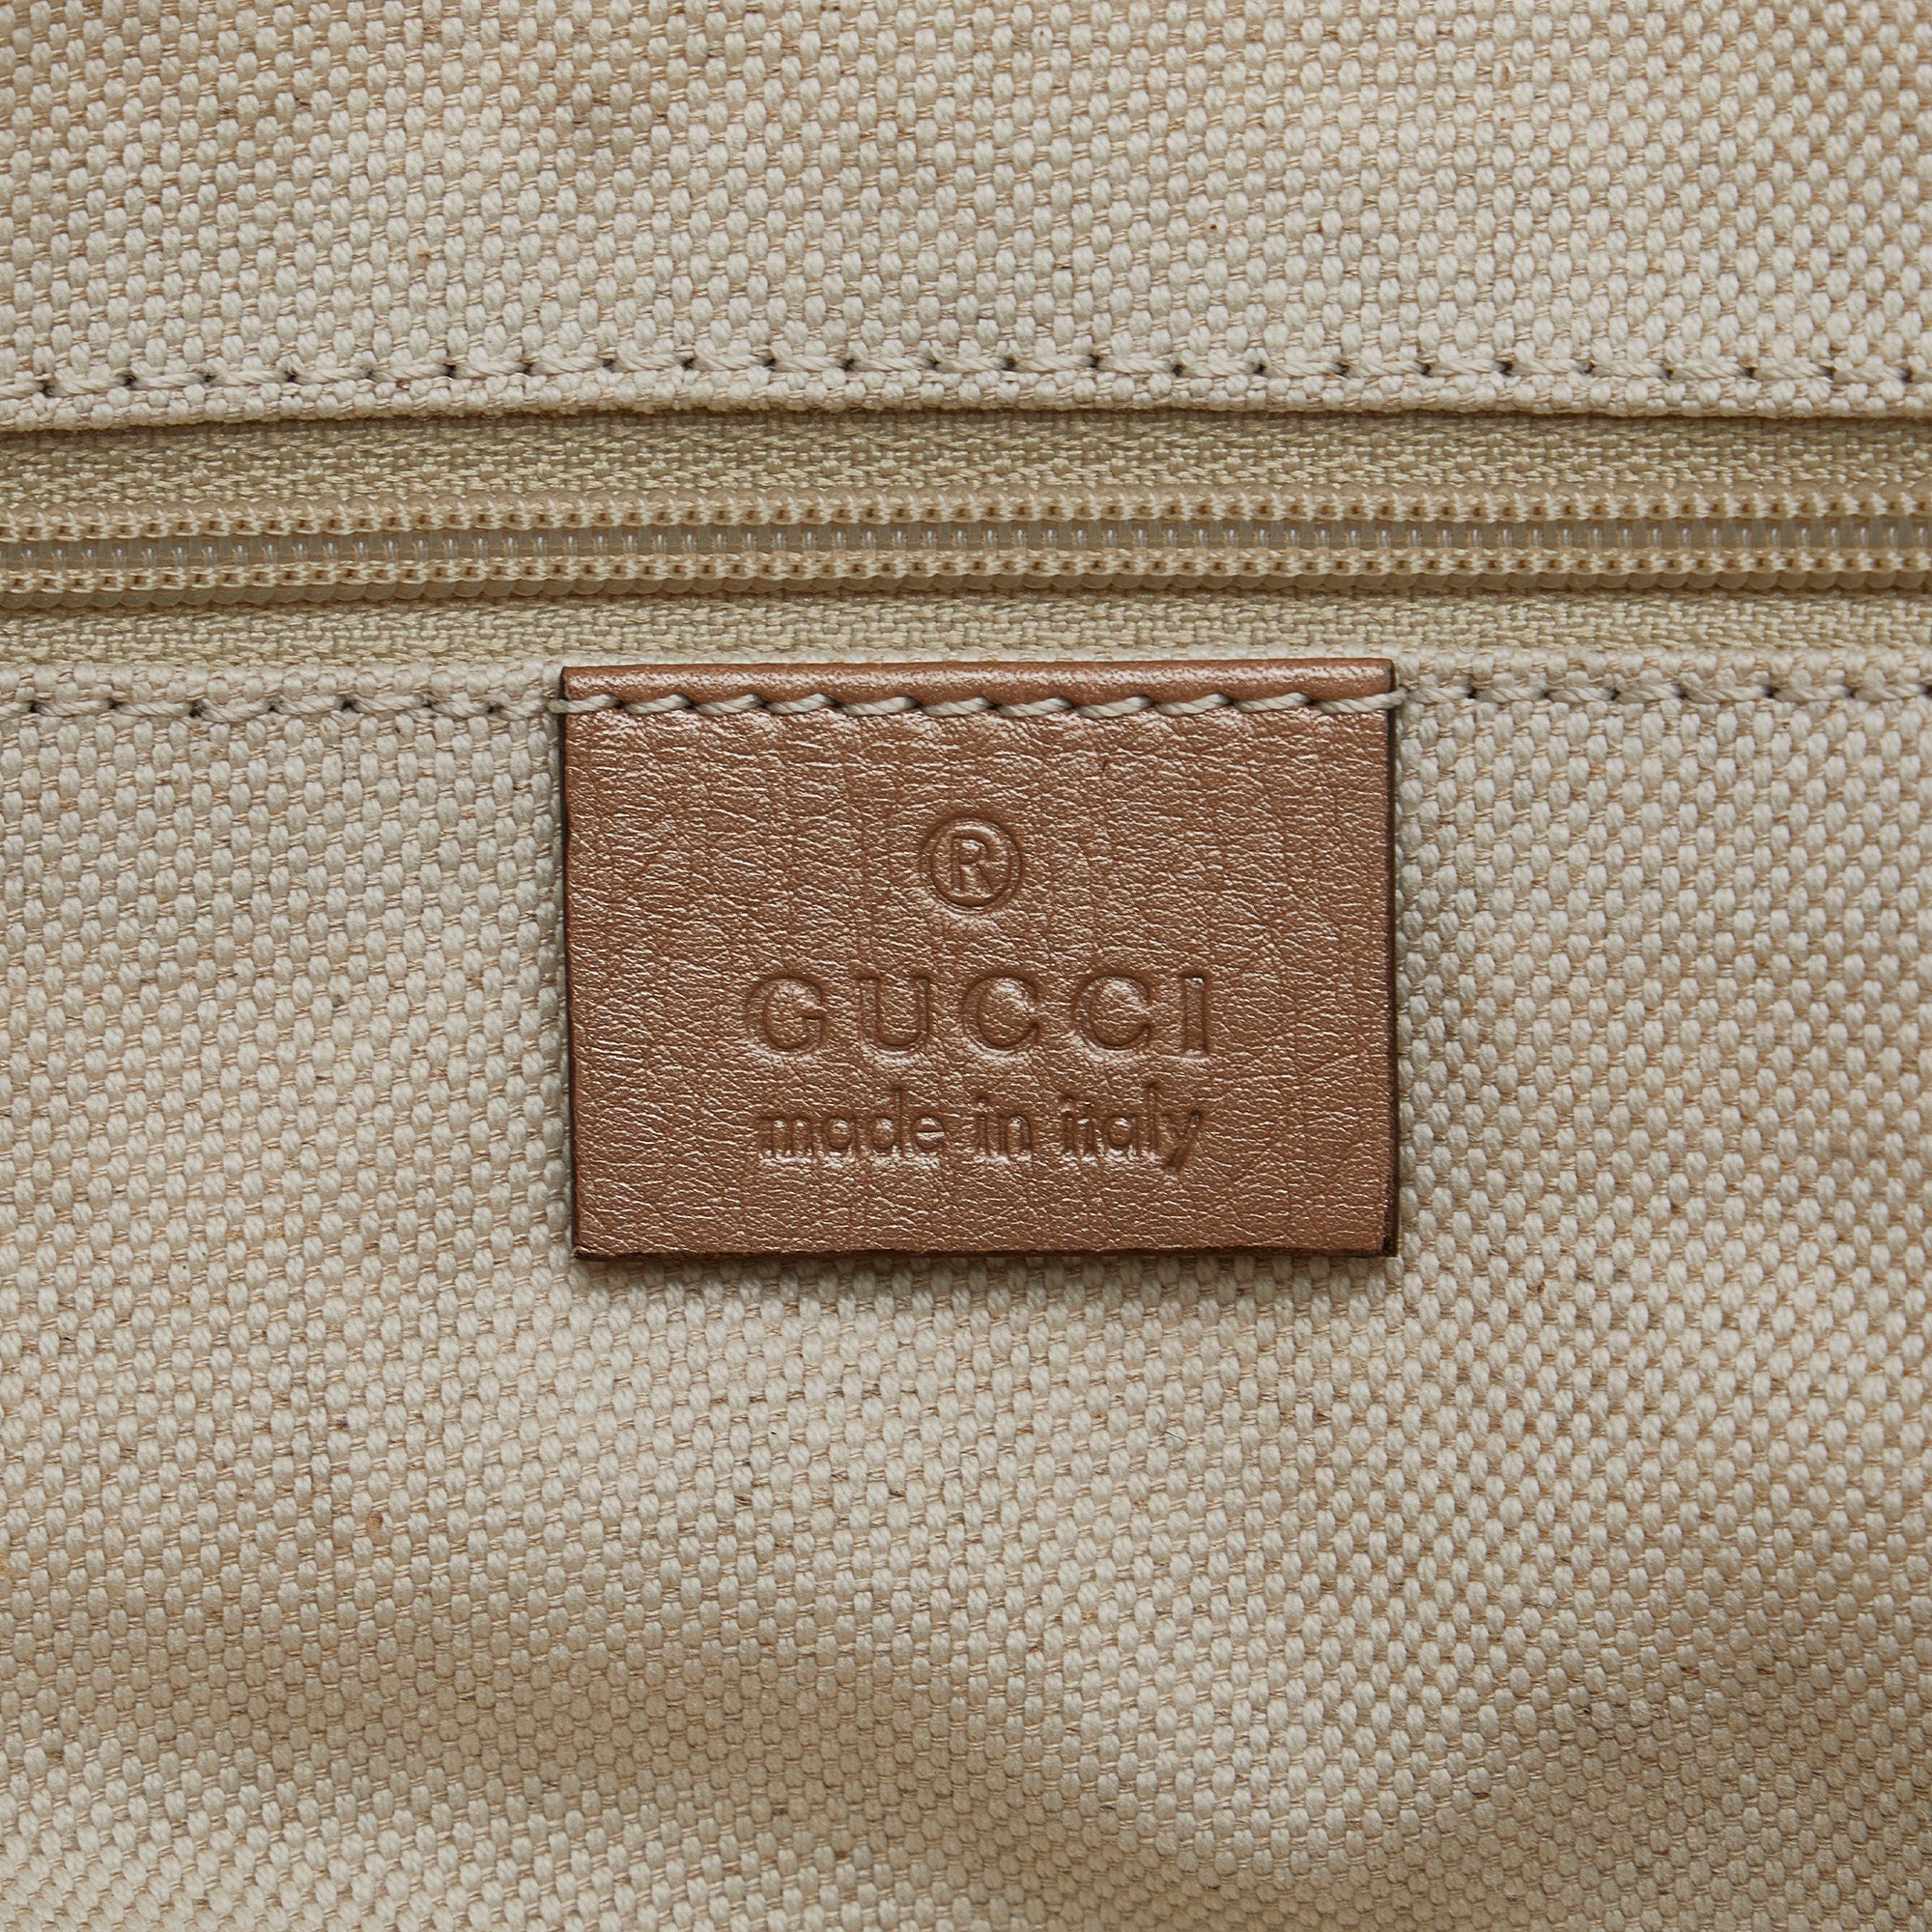 Gold Gucci Leather Sukey Satchel - Designer Revival